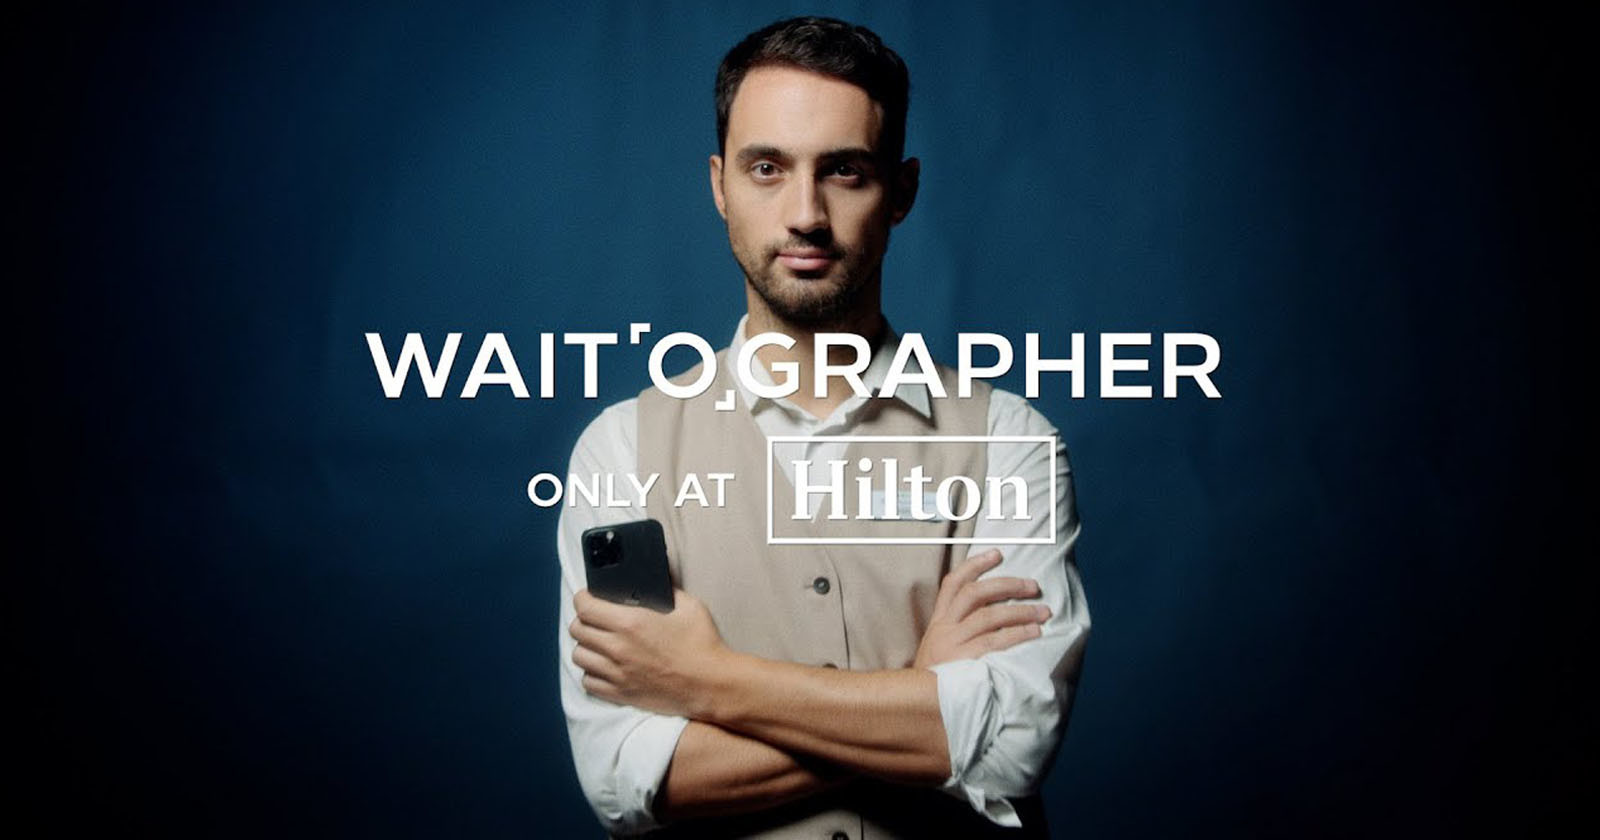  hilton trains waiters photography calls them waitographers 